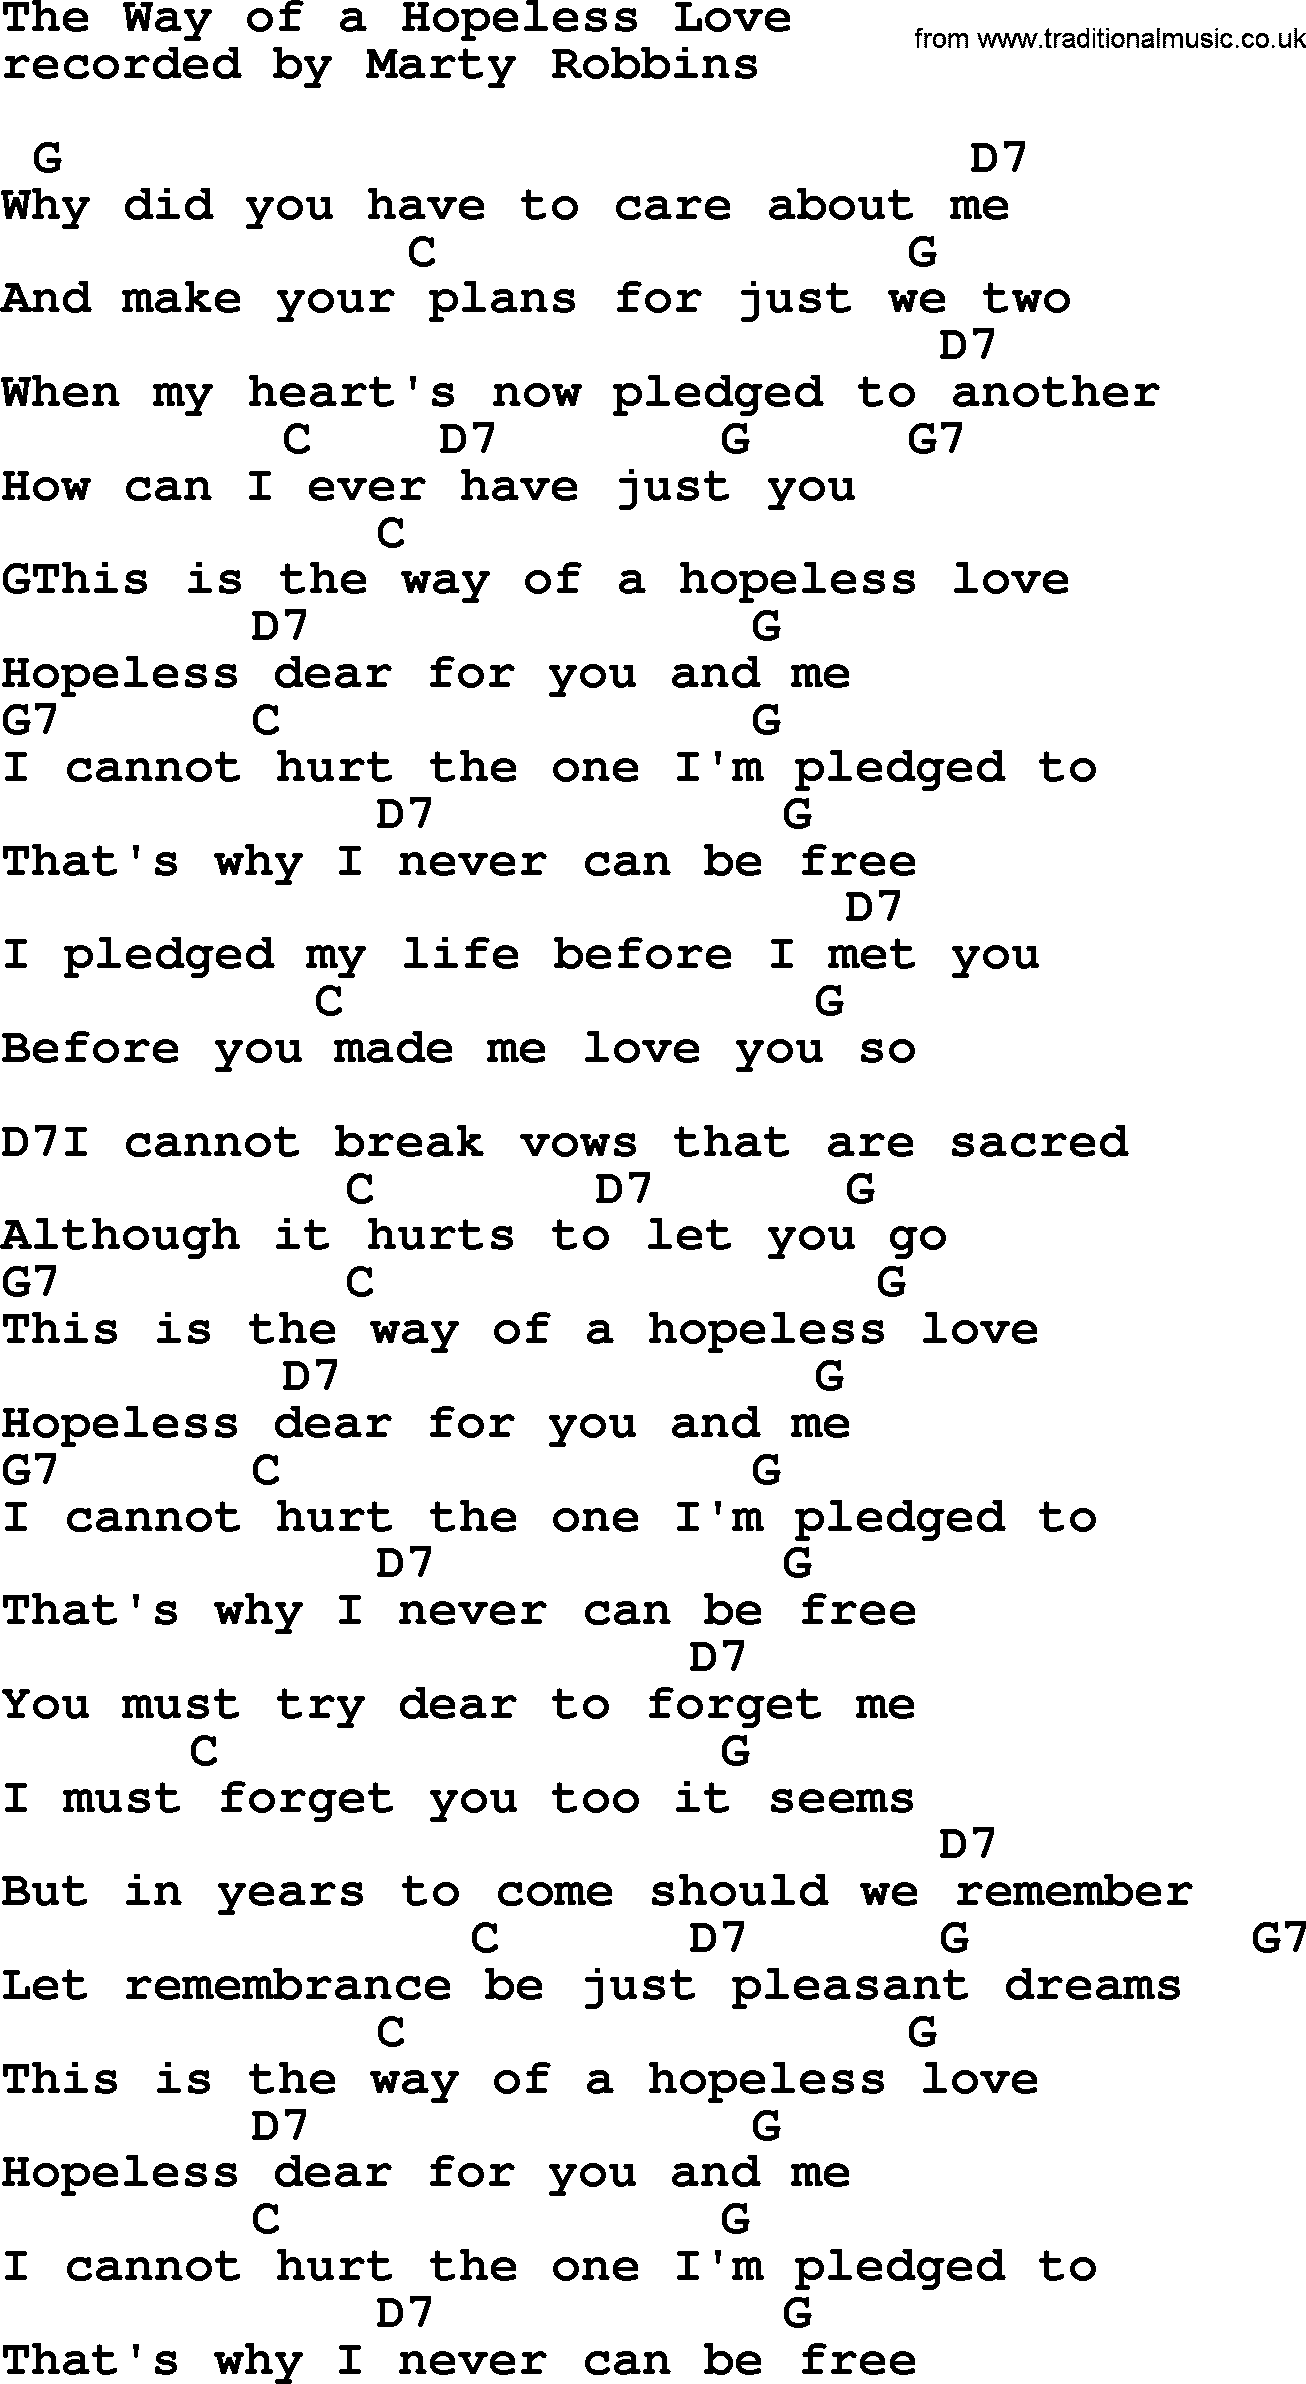 Marty Robbins song: The Way of a Hopeless Love, lyrics and chords